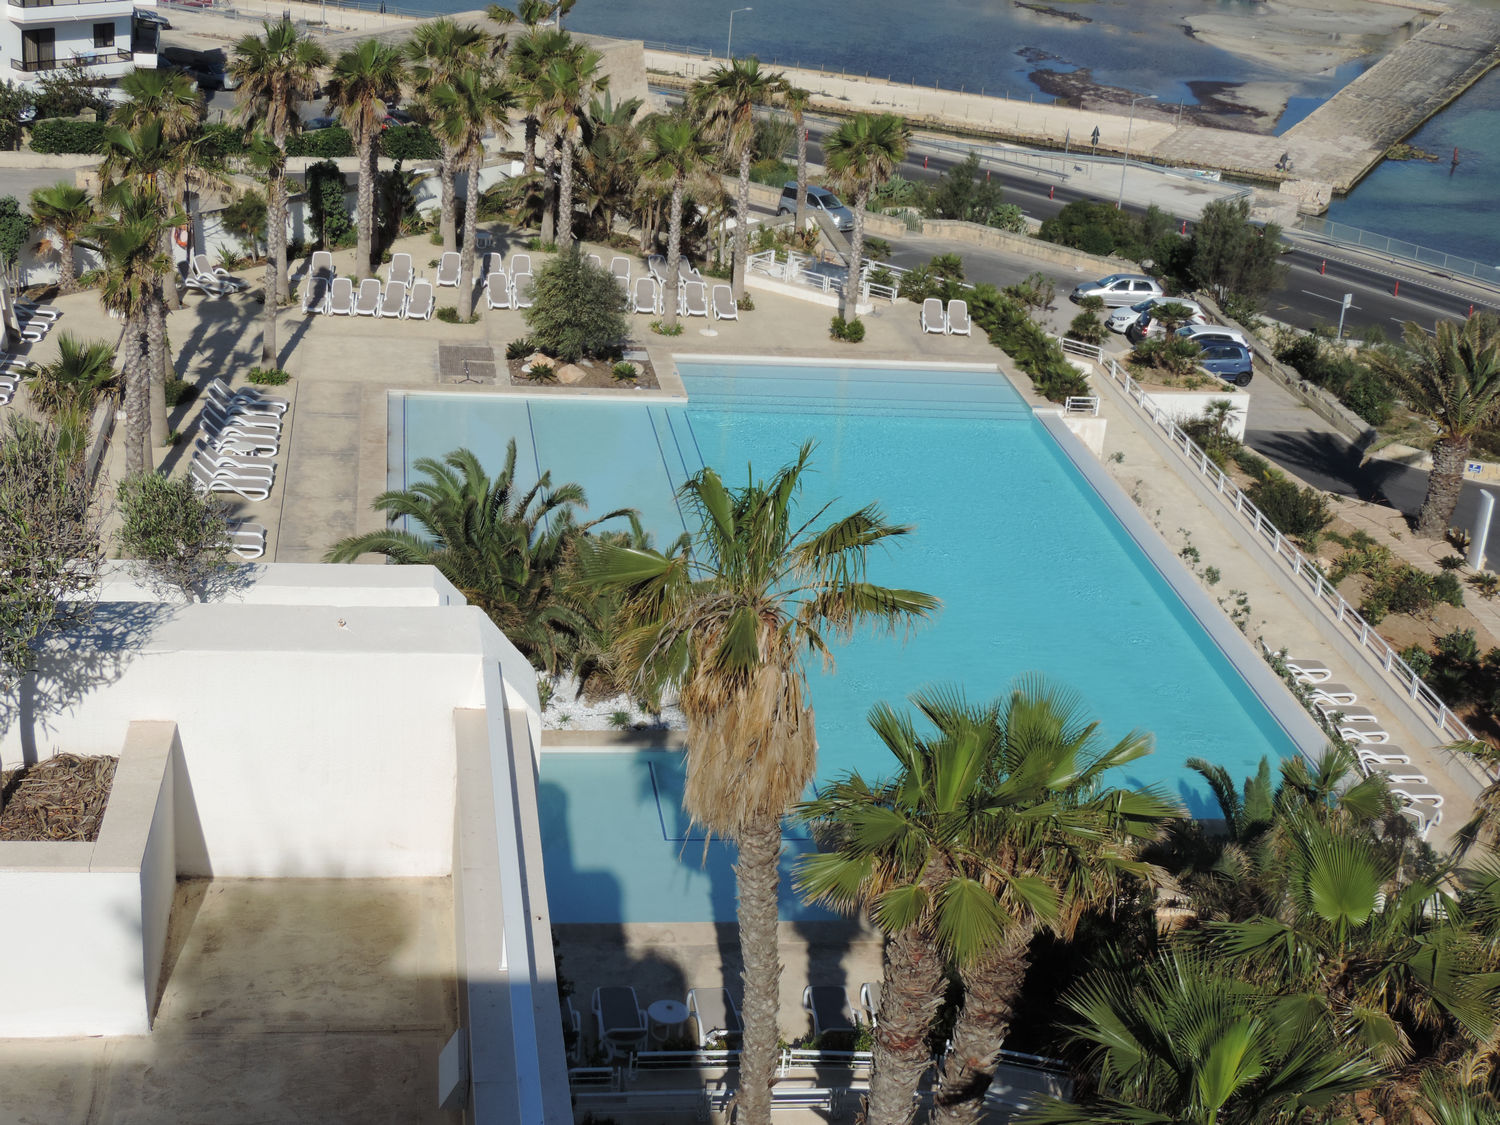 Salini Resort, piscina vista dall'alto